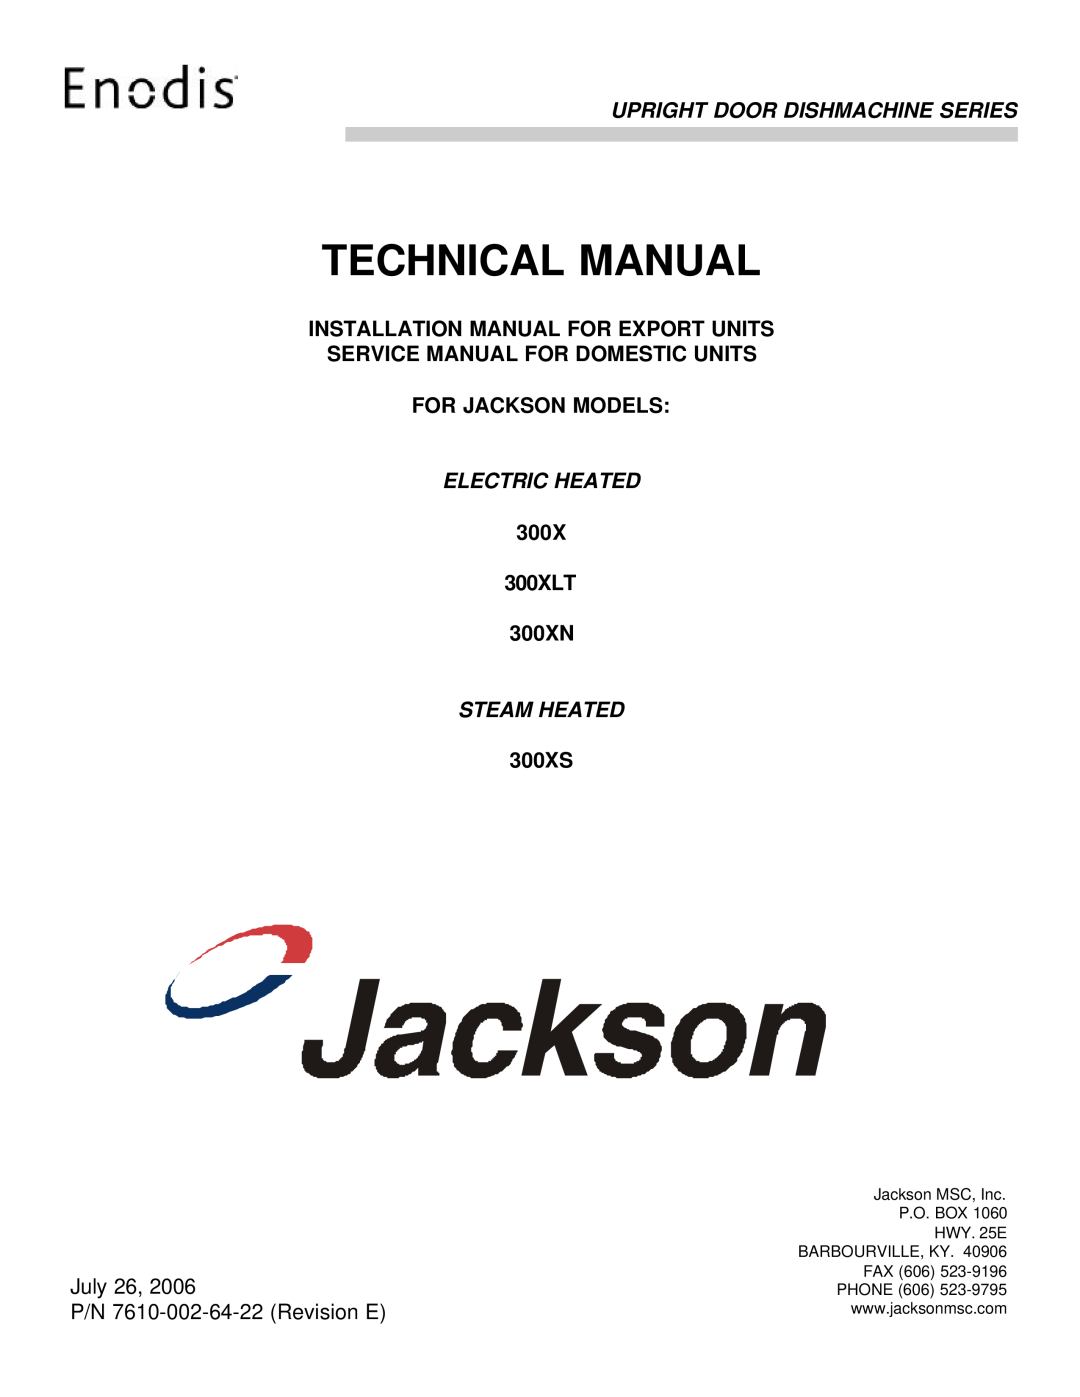 Jackson technical manual Technical Manual, For Jackson Models, 300X 300XLT 300XN, 300XS, Electric Heated, Steam Heated 